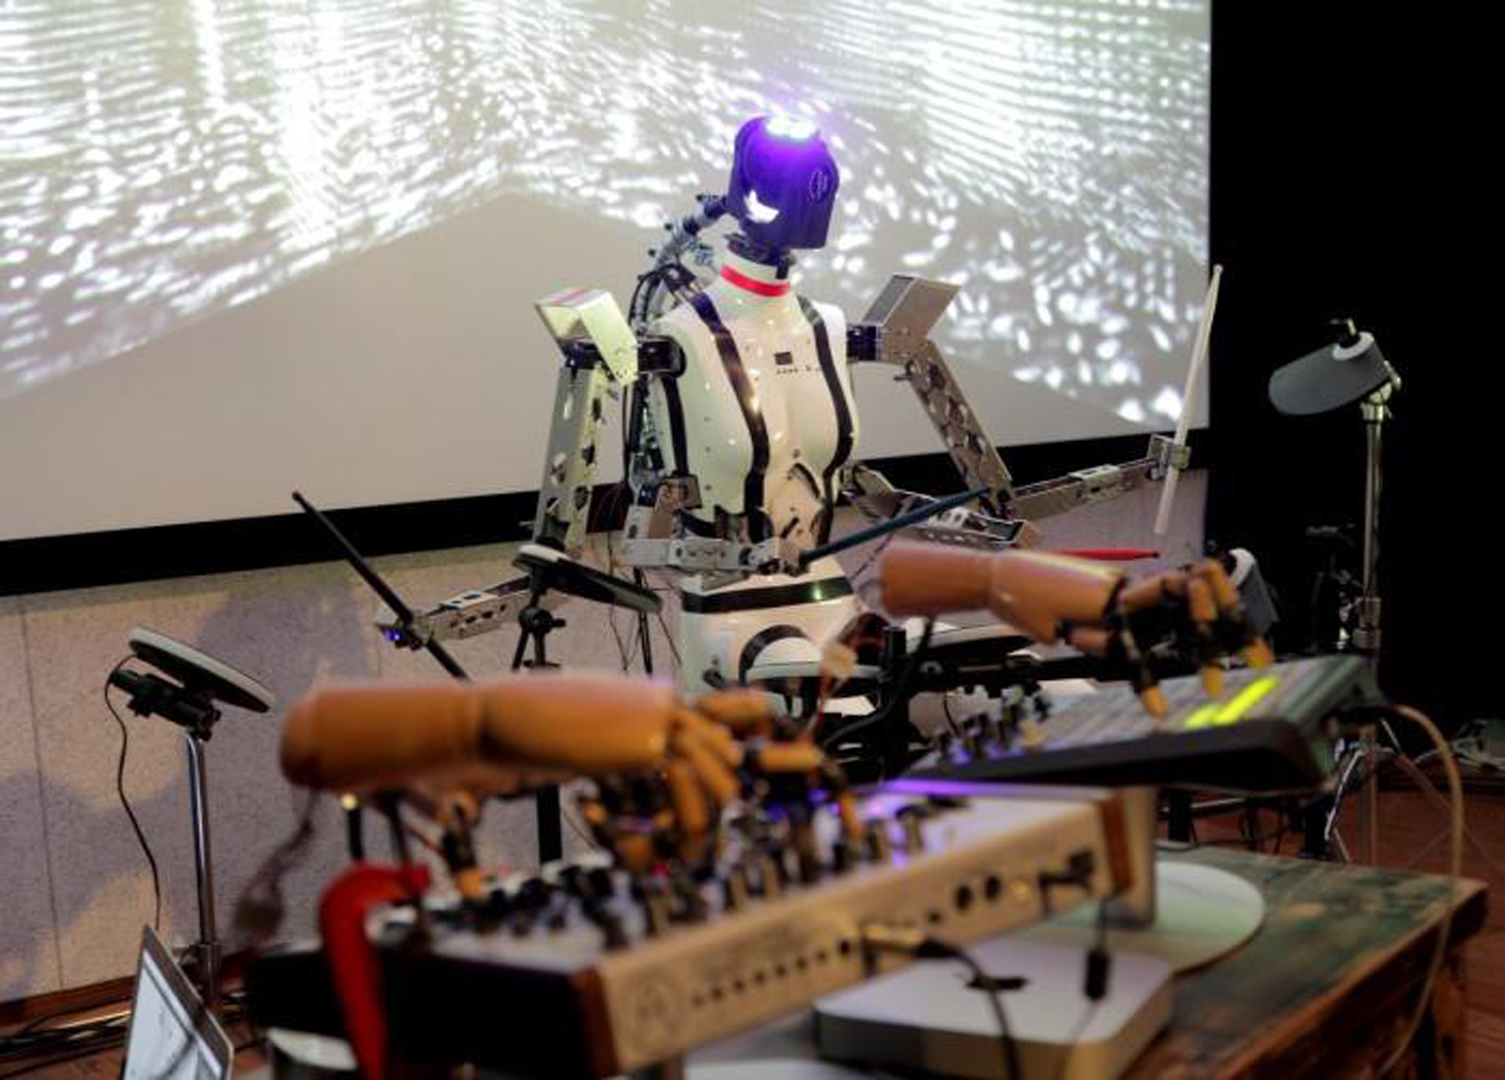 ©ISEA2016: 22nd International Symposium on Electronic Art, Soh Yeong Roh, Emotional Robot